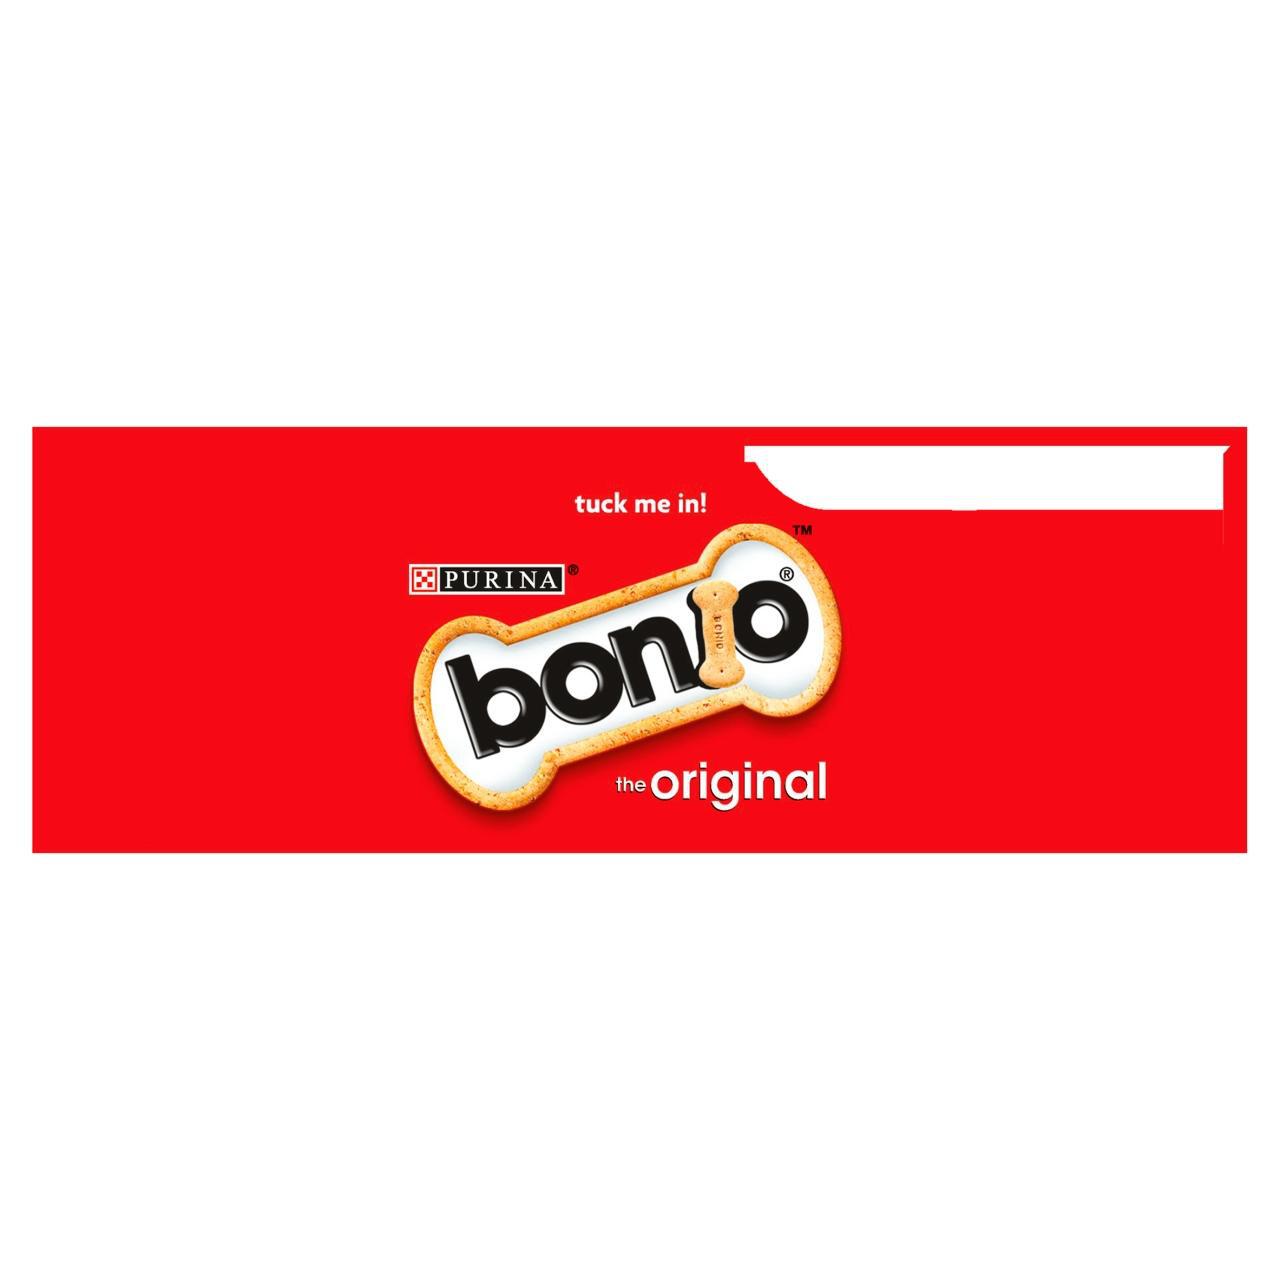 Bonio The Original Biscuits Dog Food 650g